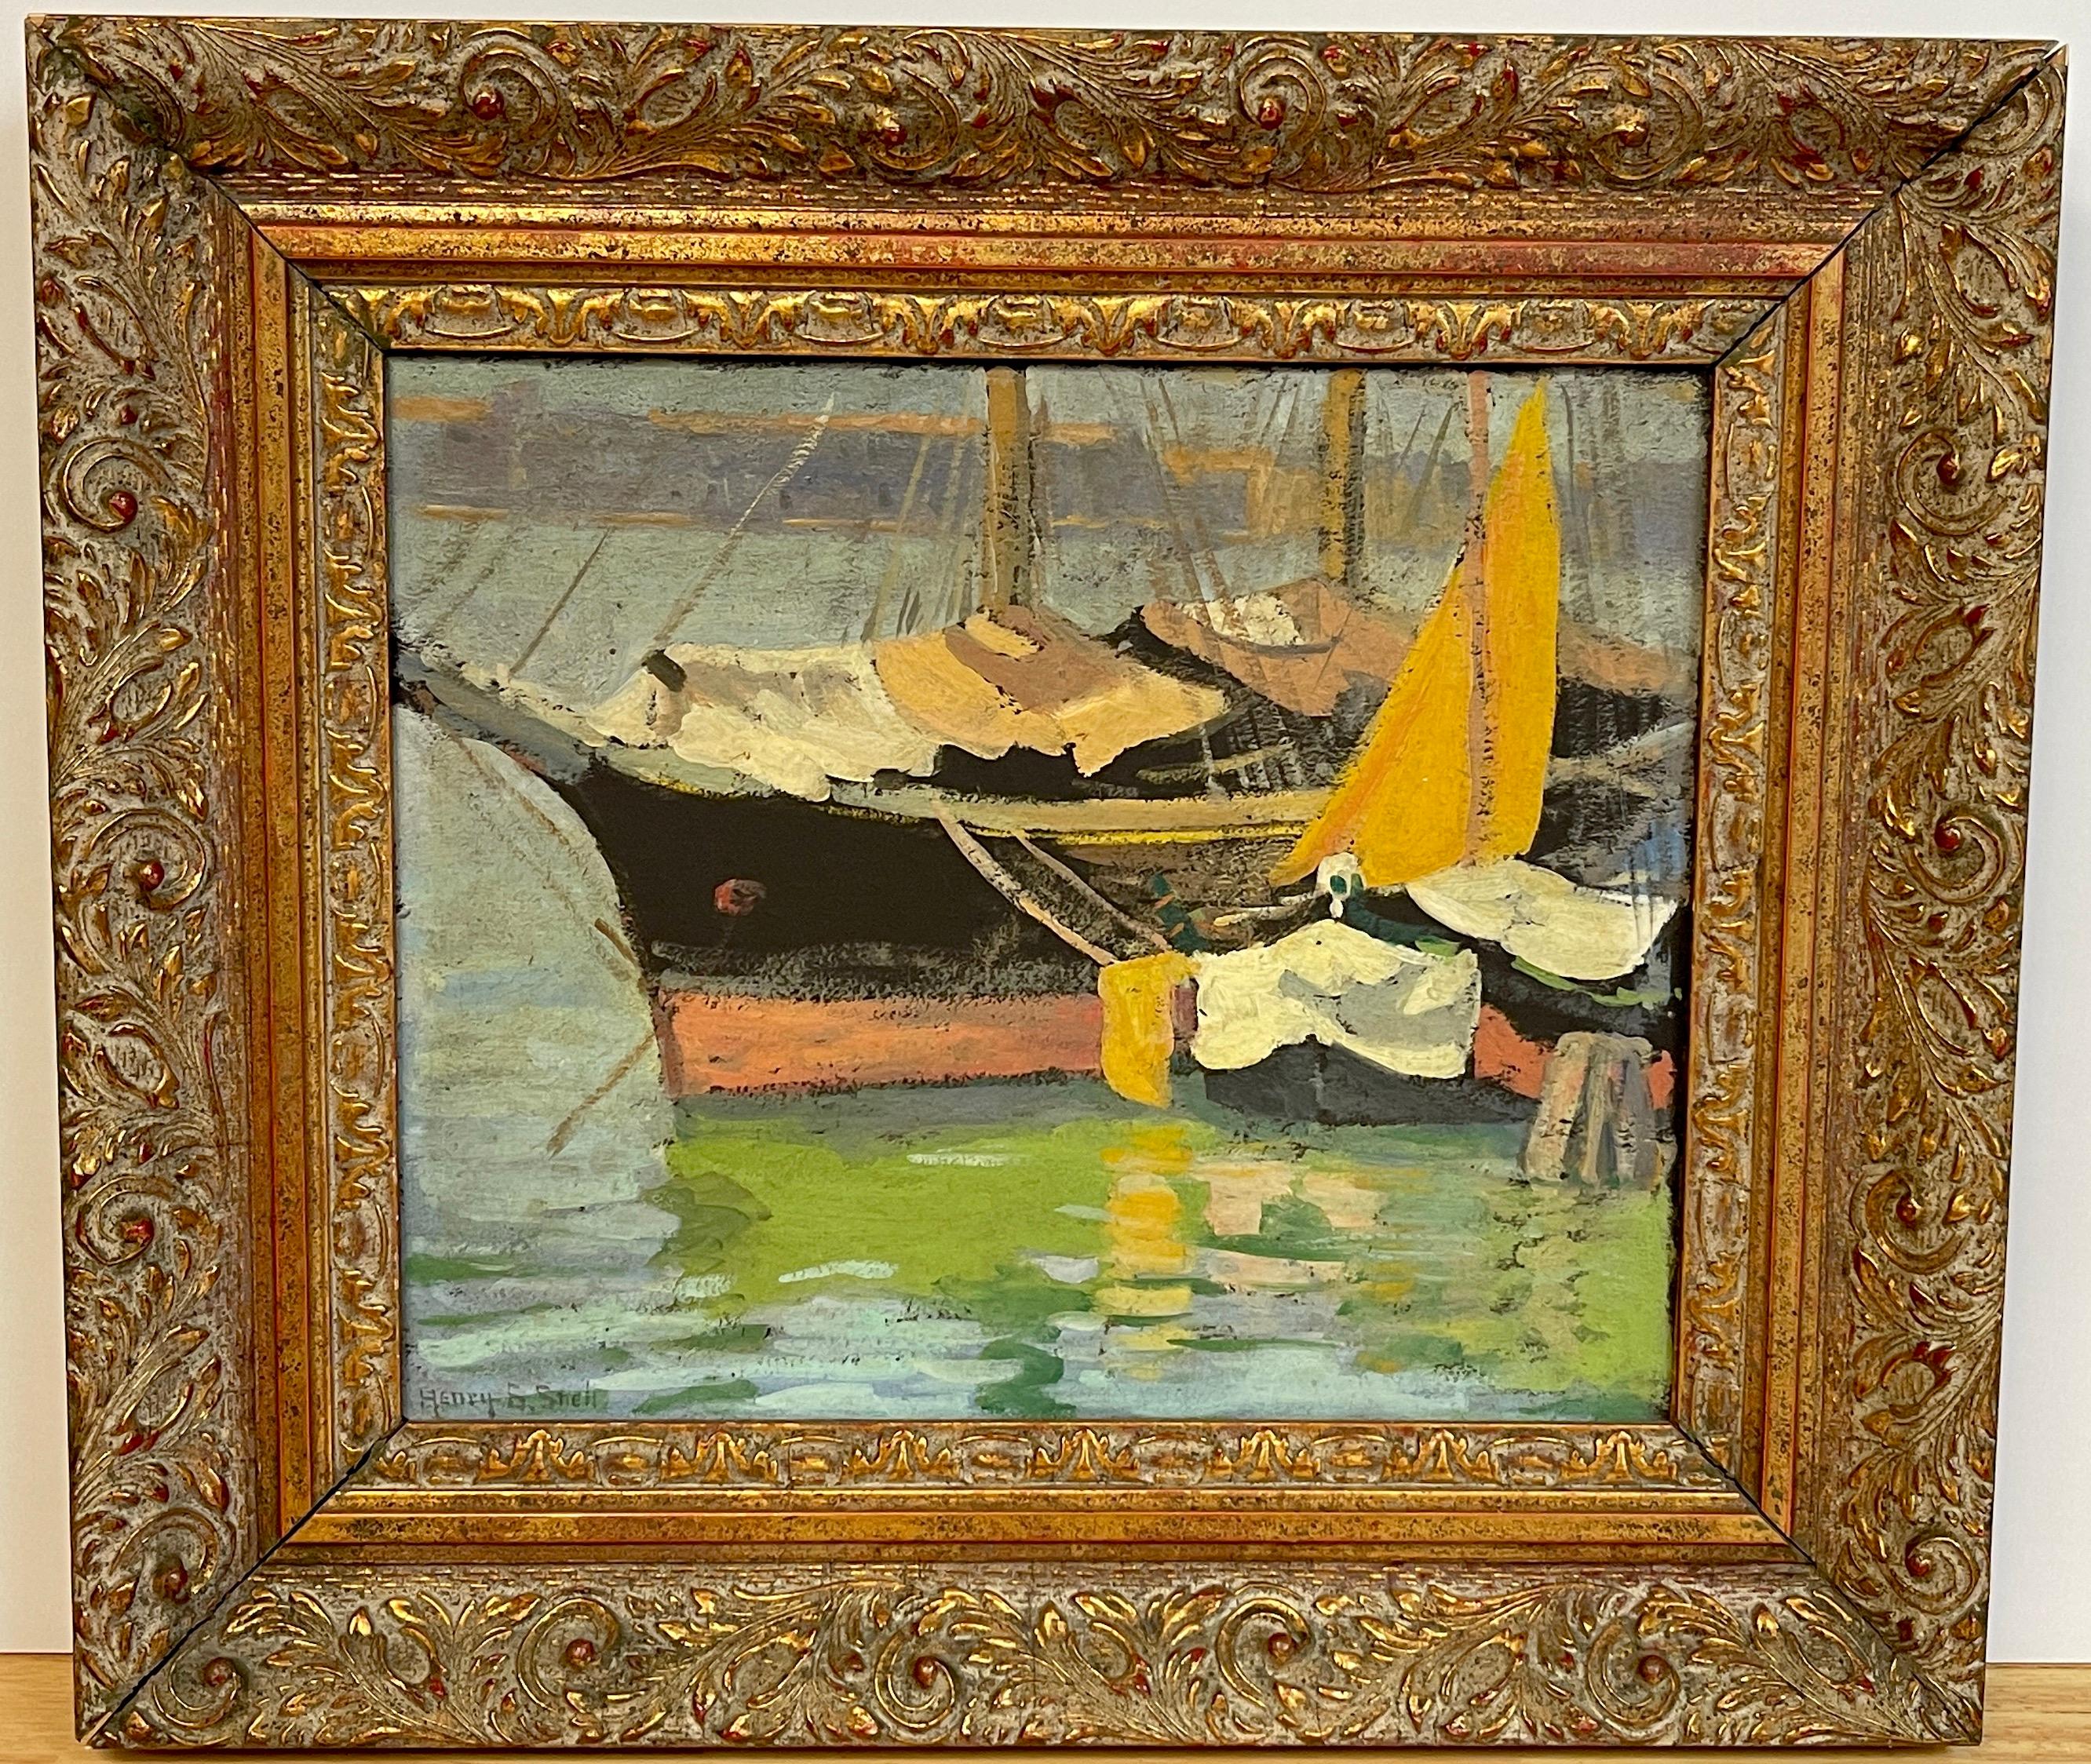 Henry Barley Snell 'Glouster Harbor Twilight'
Henry Barley Snell 1858 - 1943, American Impressionist
Signed Lower Left 'Henry B Snell'
Oil on Artists Board 11